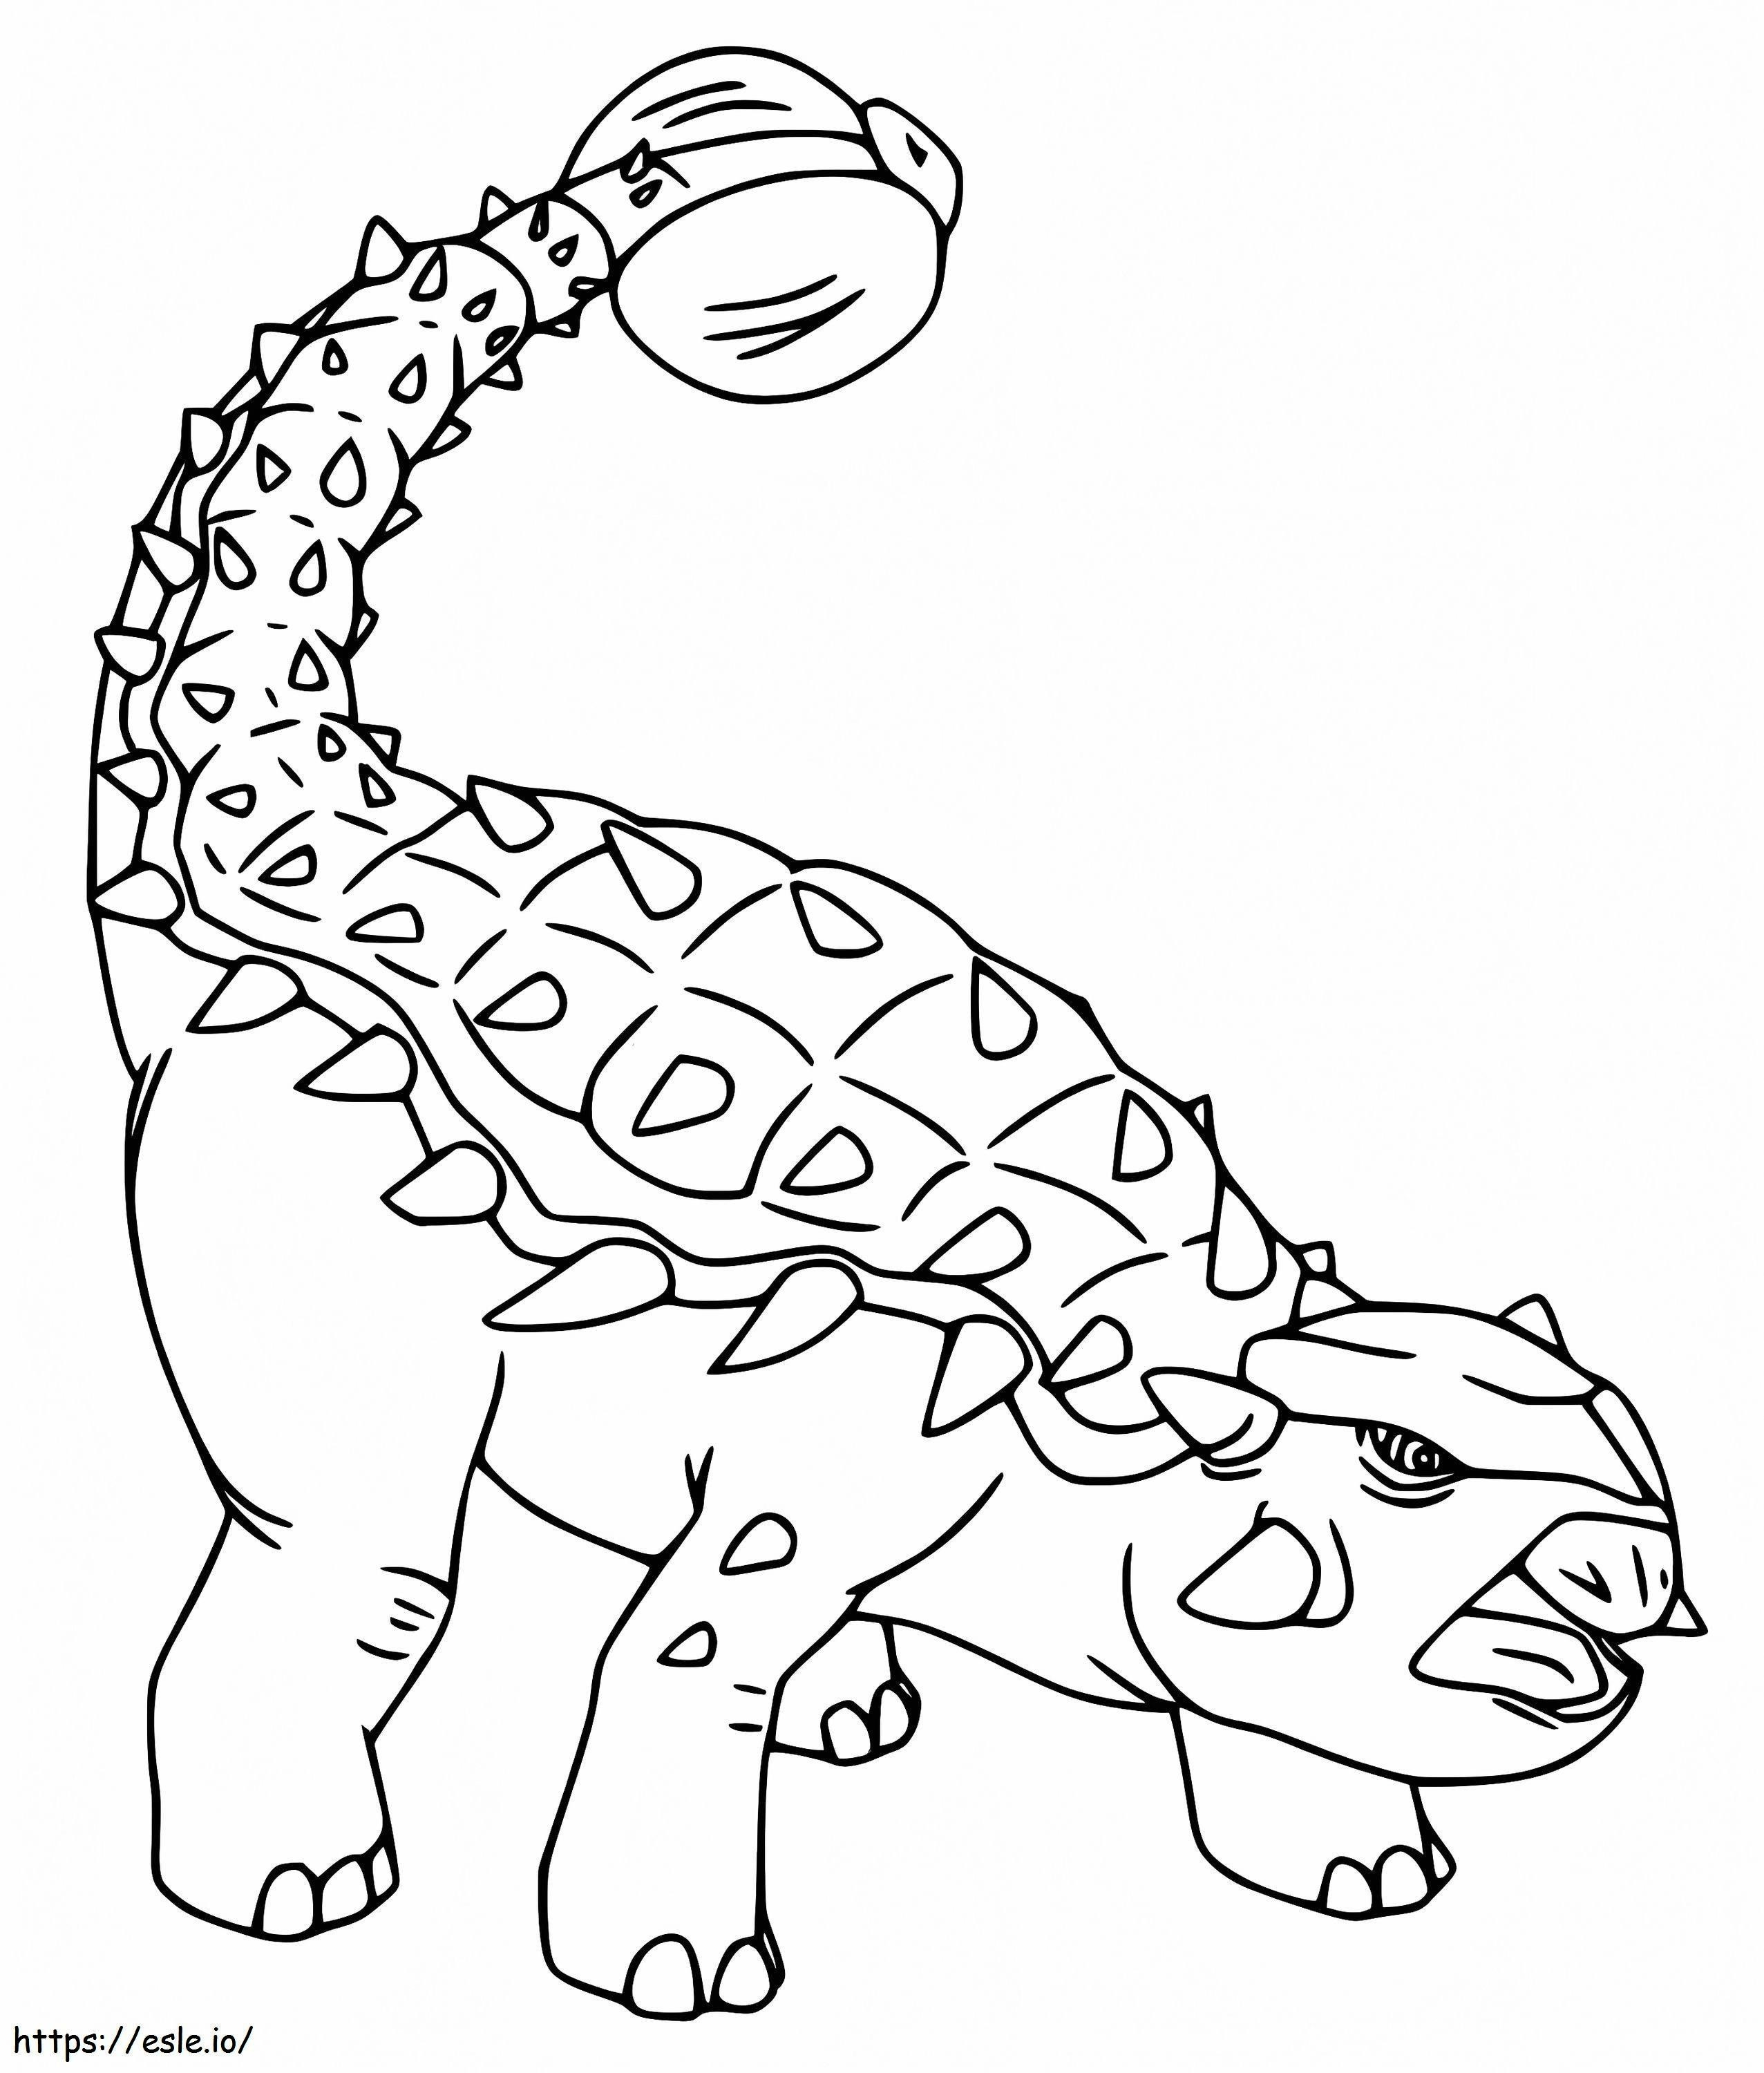 Wütender Ankylosaurus ausmalbilder